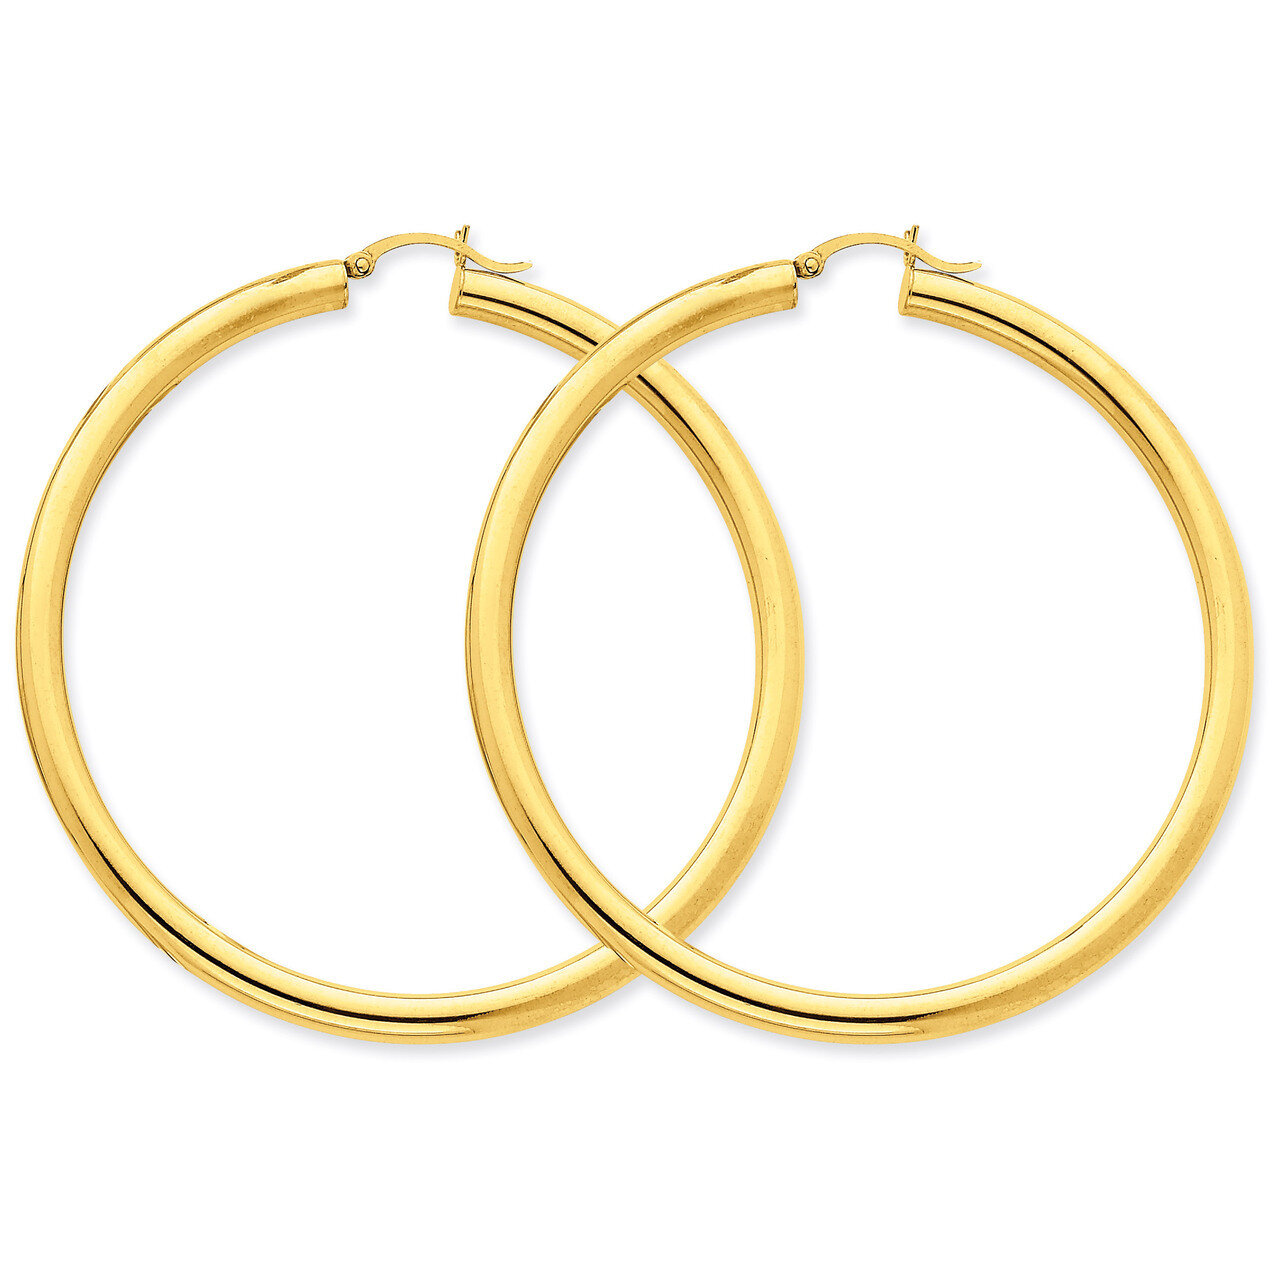 Polished 4mm x 65mm Tube Hoop Earrings 10k Gold 10T955